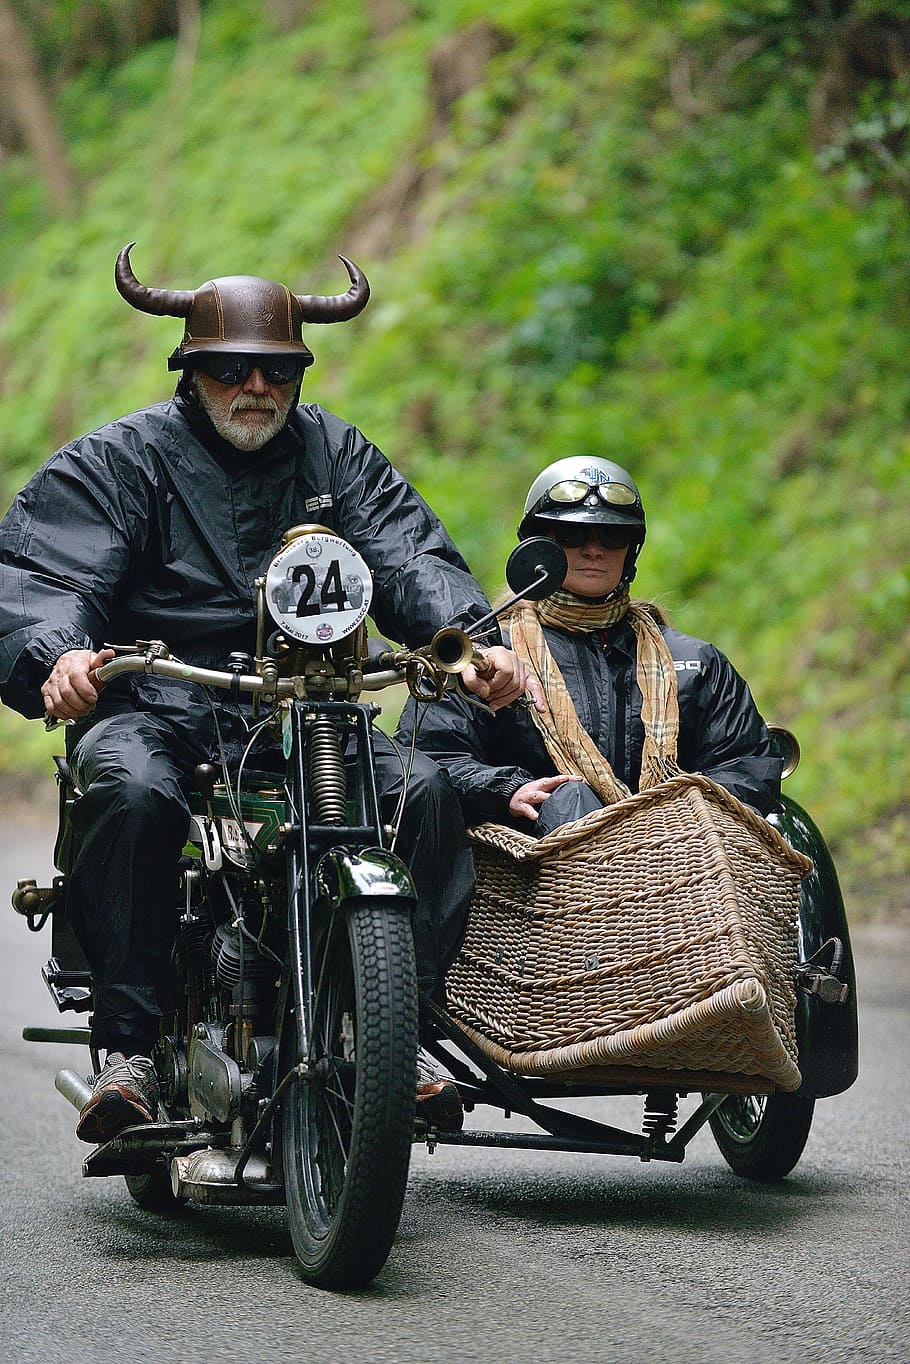 man, riding, motorcycle, viking helmet, sitting, sidecar, vehicle, motorcyclist, biker, motorcycles